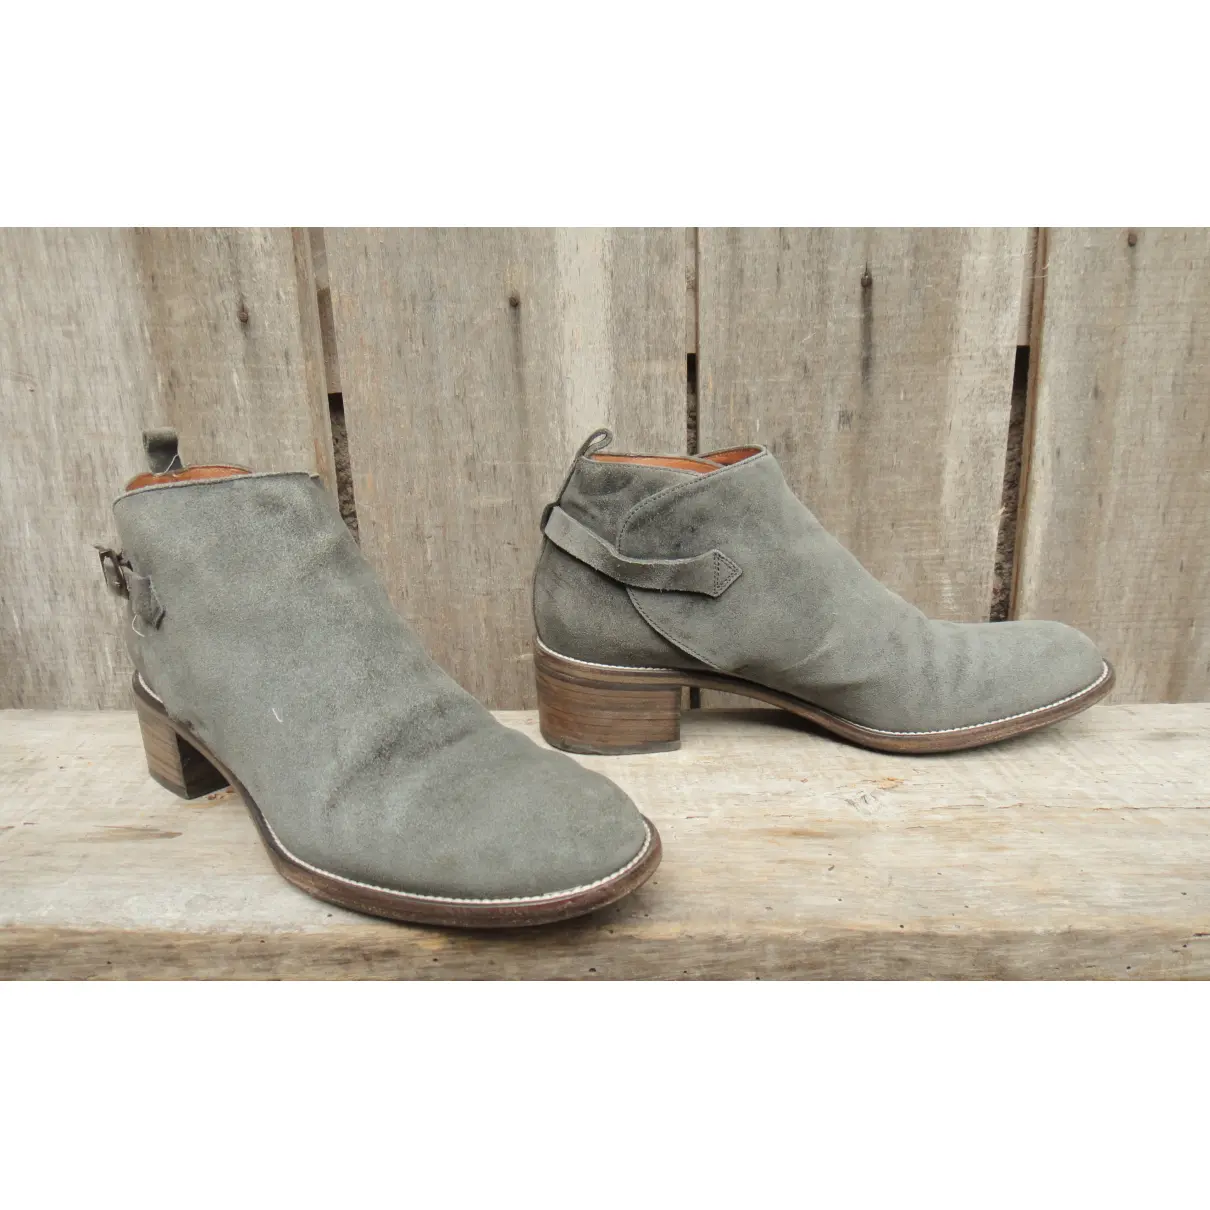 Buy Sartore Buckled boots online